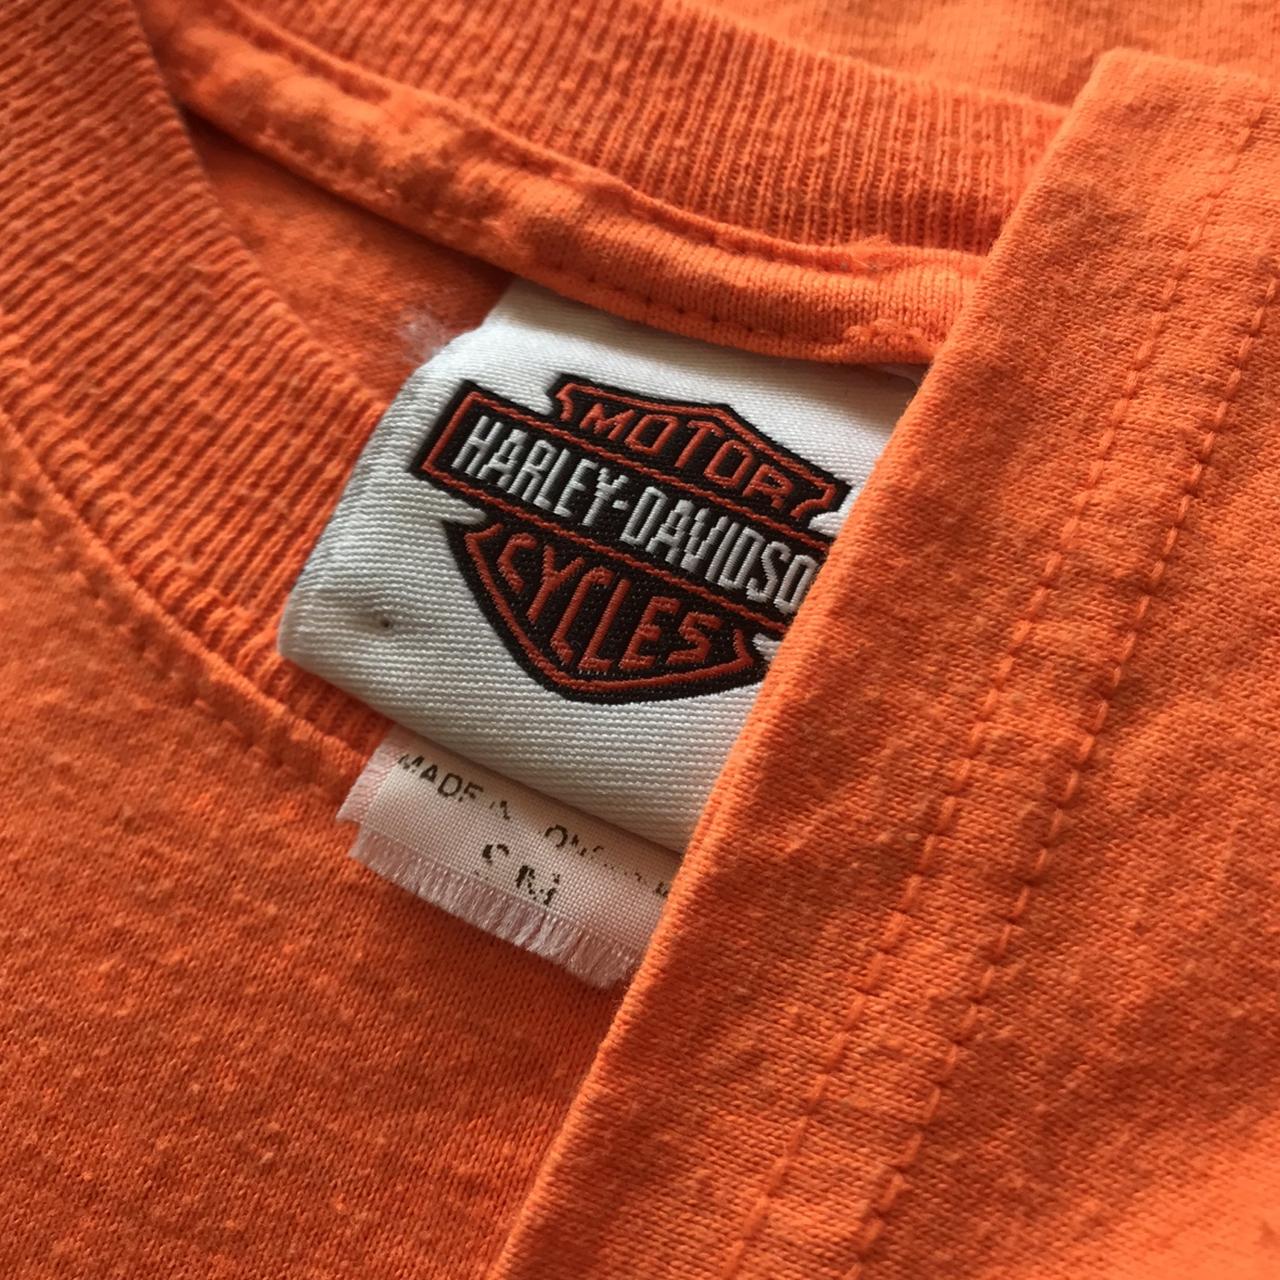 Vtg Men's Harley Davidson T-Shirt Orange Motorcycle Medium Orlando